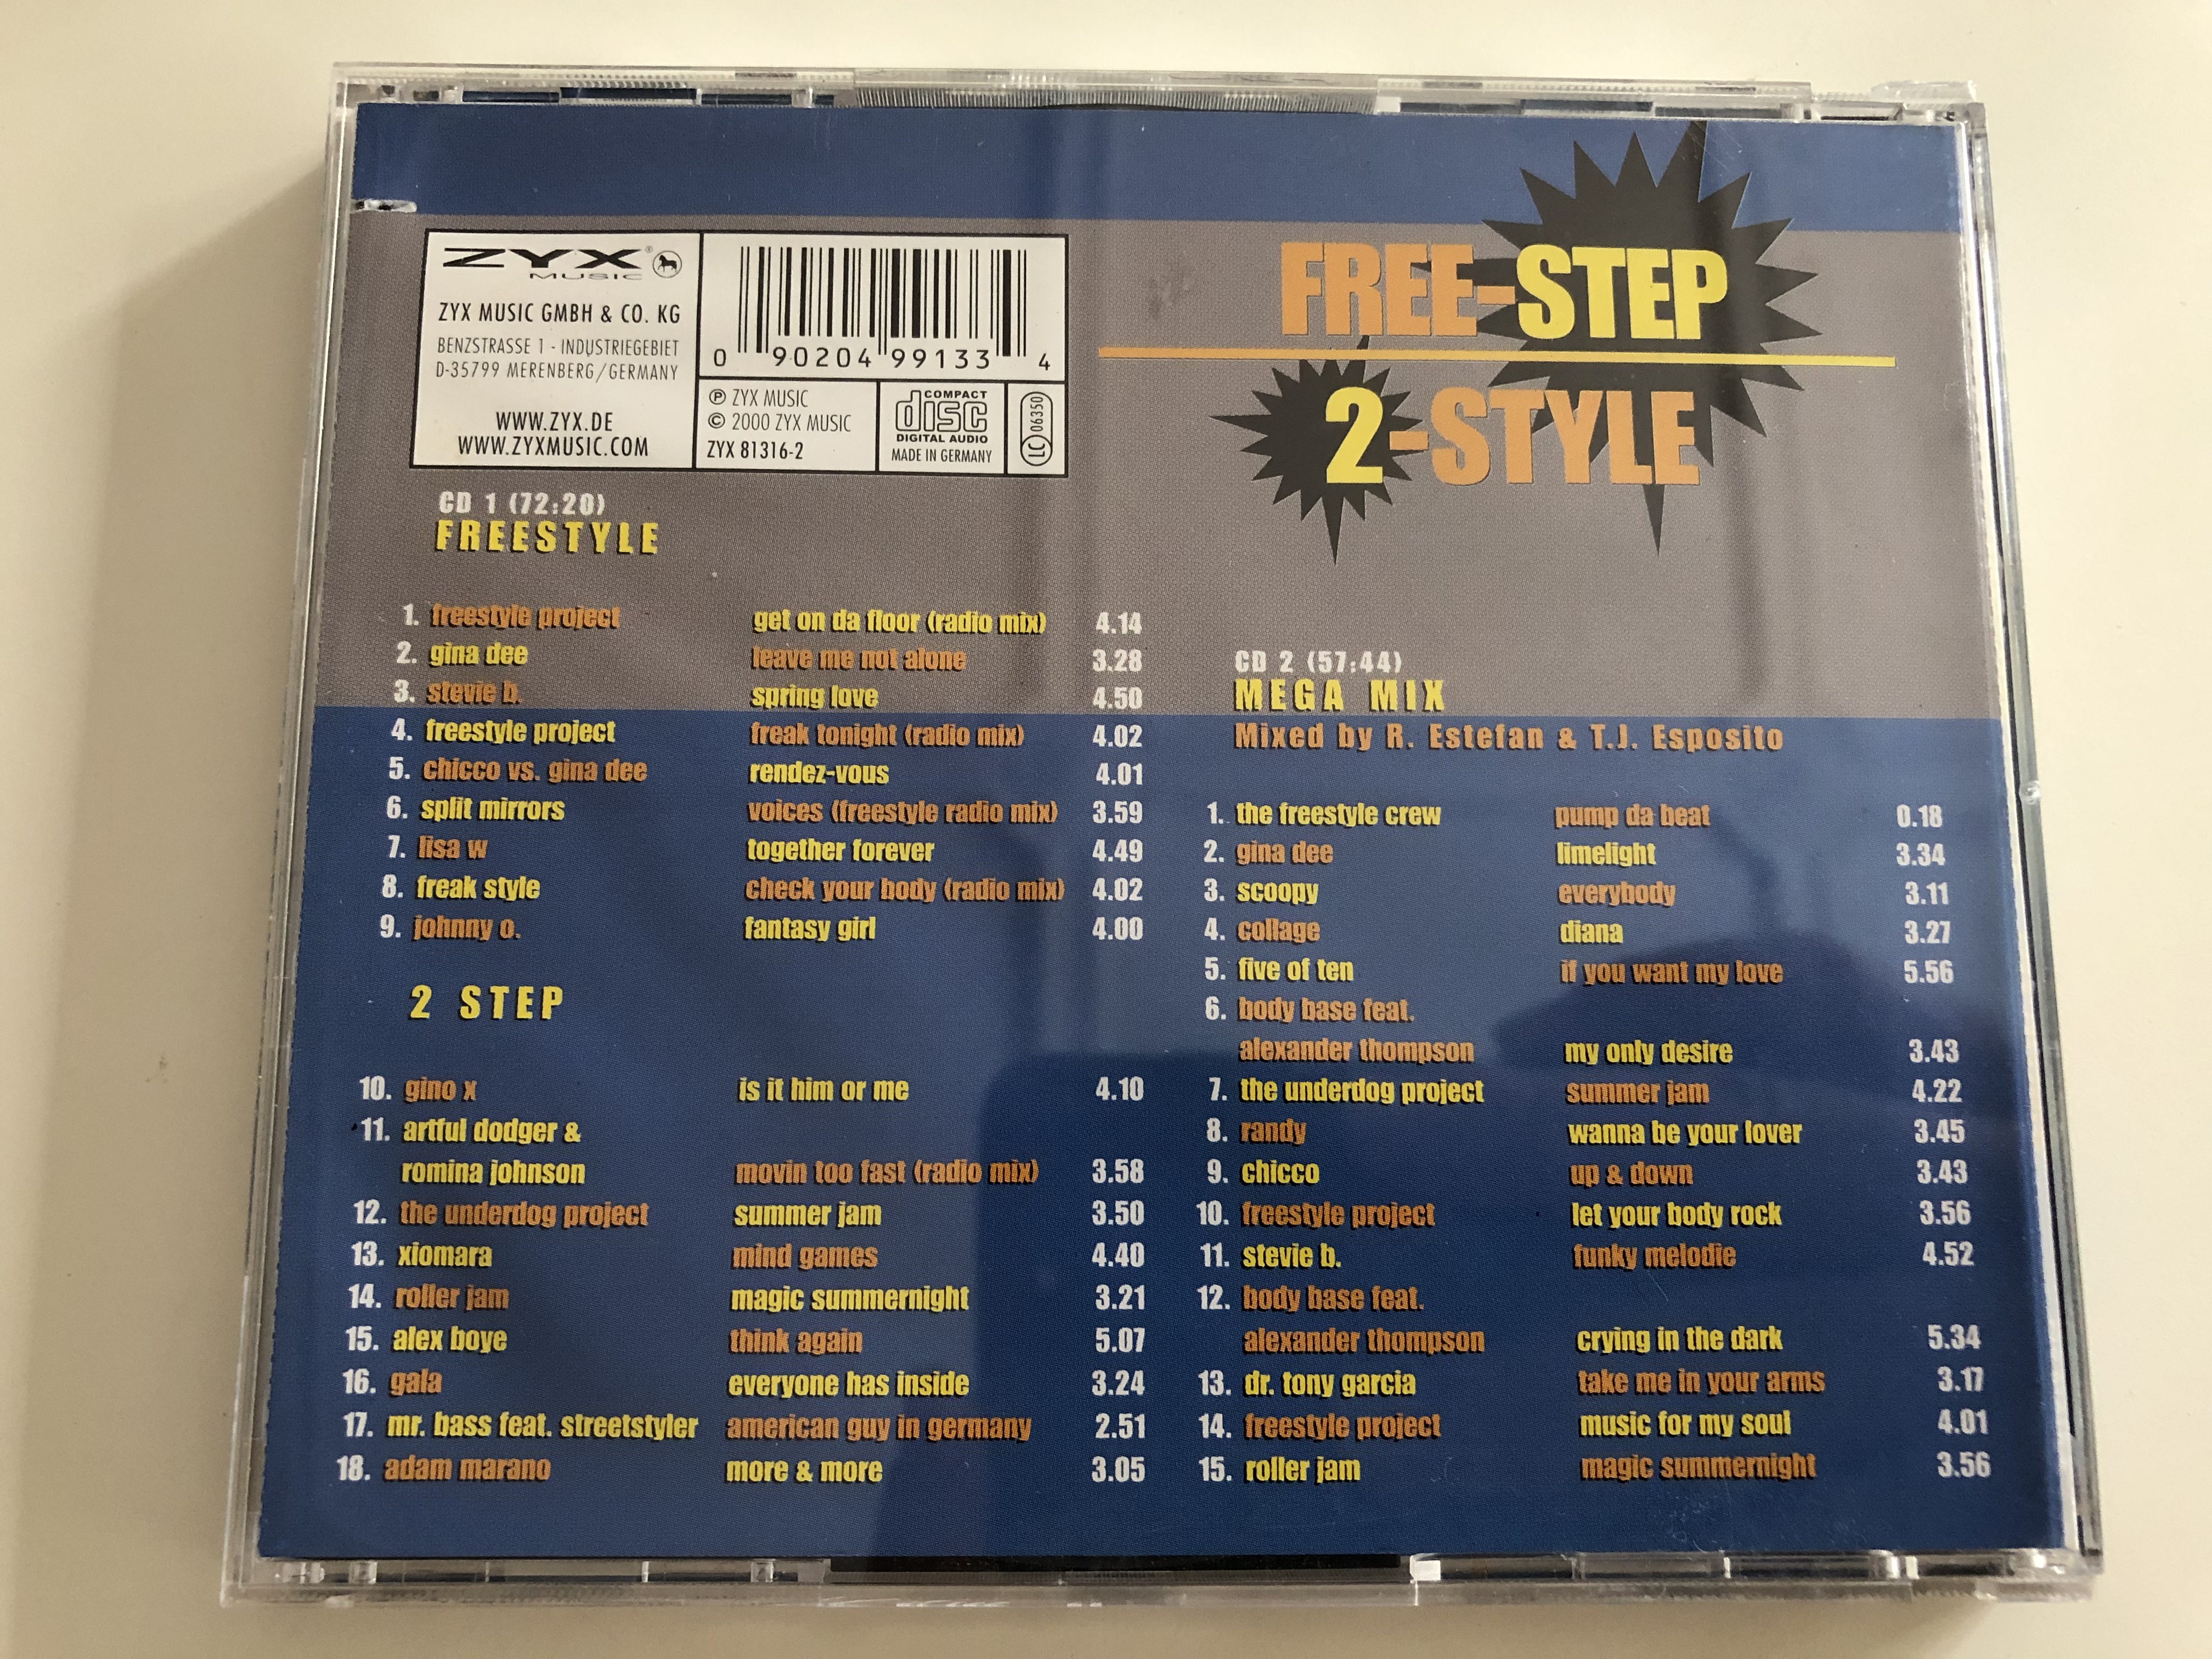 free-step-2-style-the-hitmix-including-mega-mix-by-r.-estefan-t.j.-esposito-artful-dodger-alex-boye-johnny-o-stevie-b-gina-dee-2x-audio-cd-set-zyx-81316-2-10-.jpg